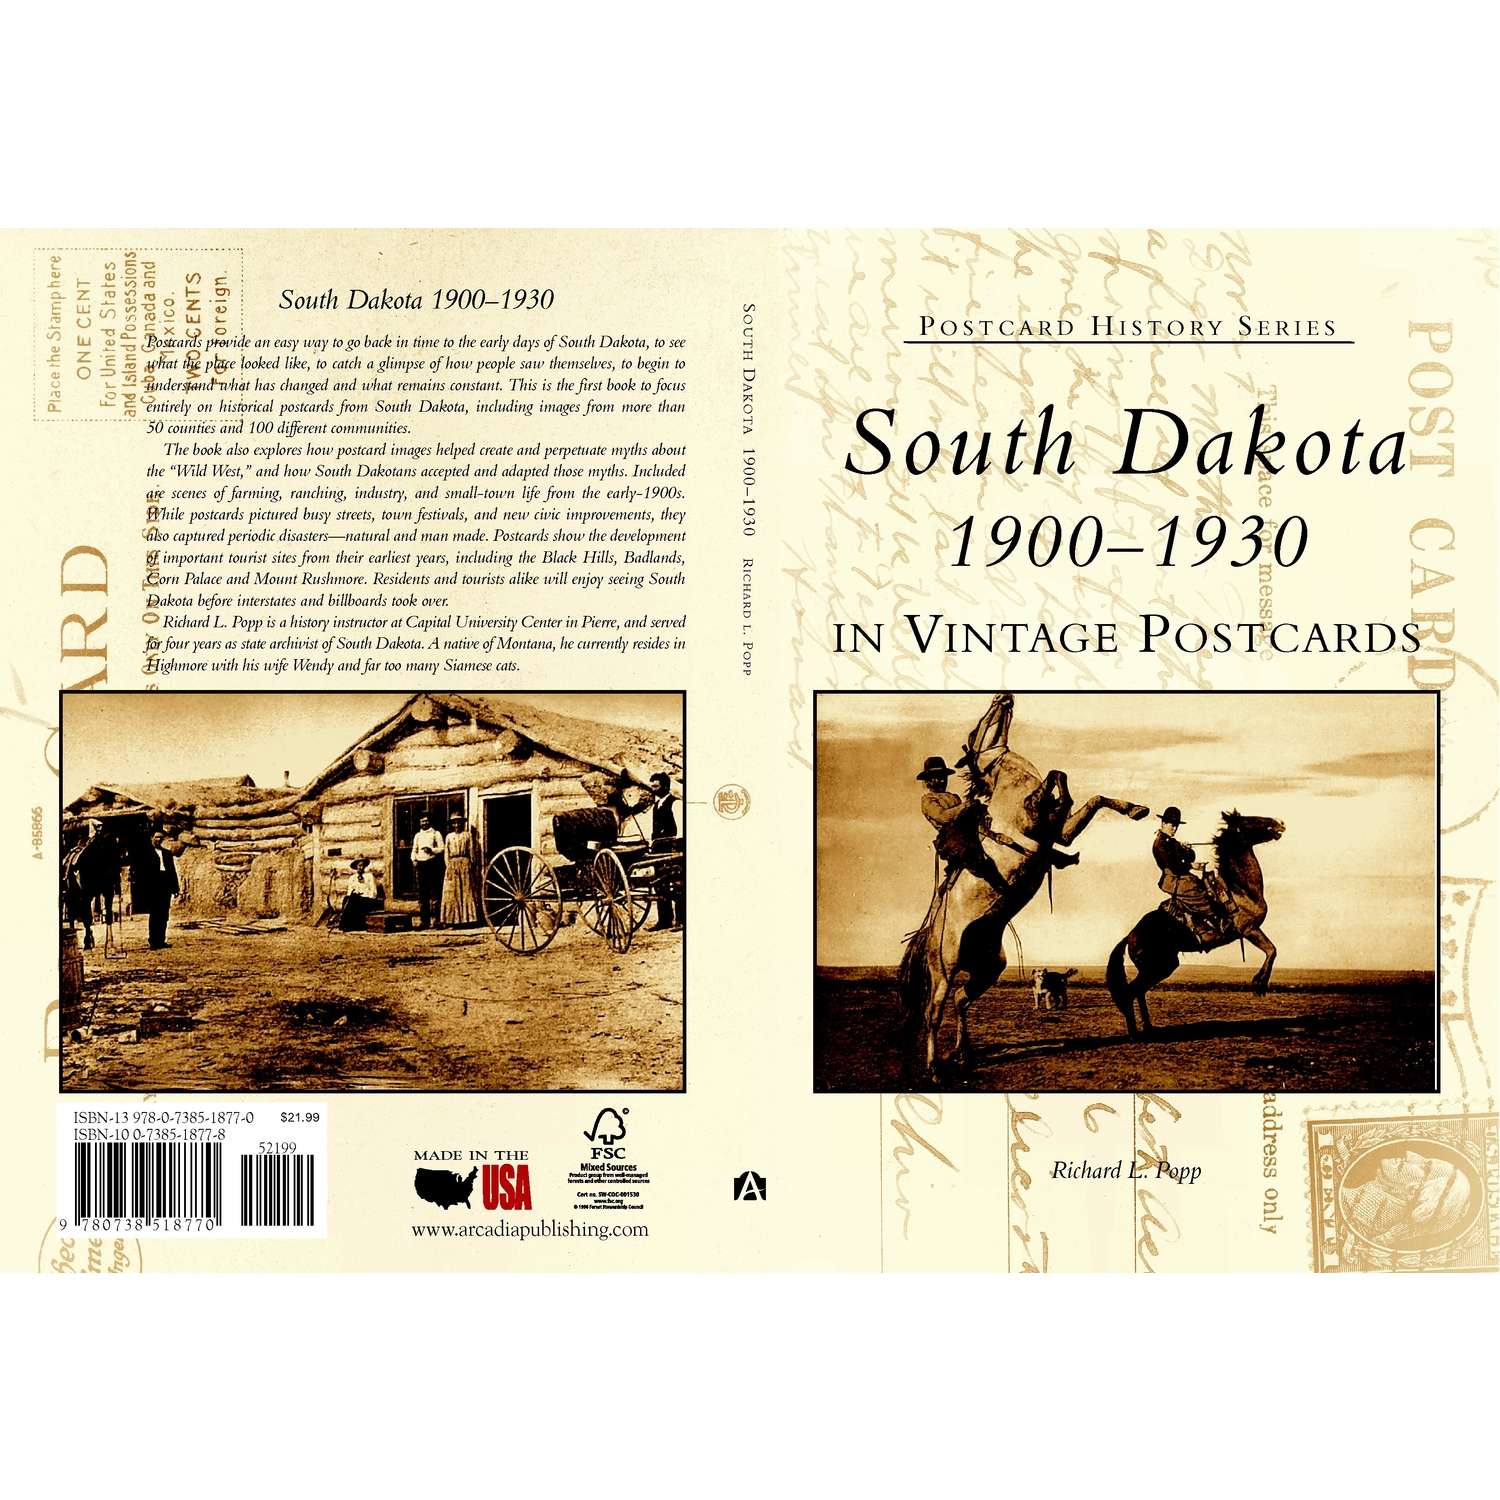 South Dakota 1900-1930 in Vintage Postcards